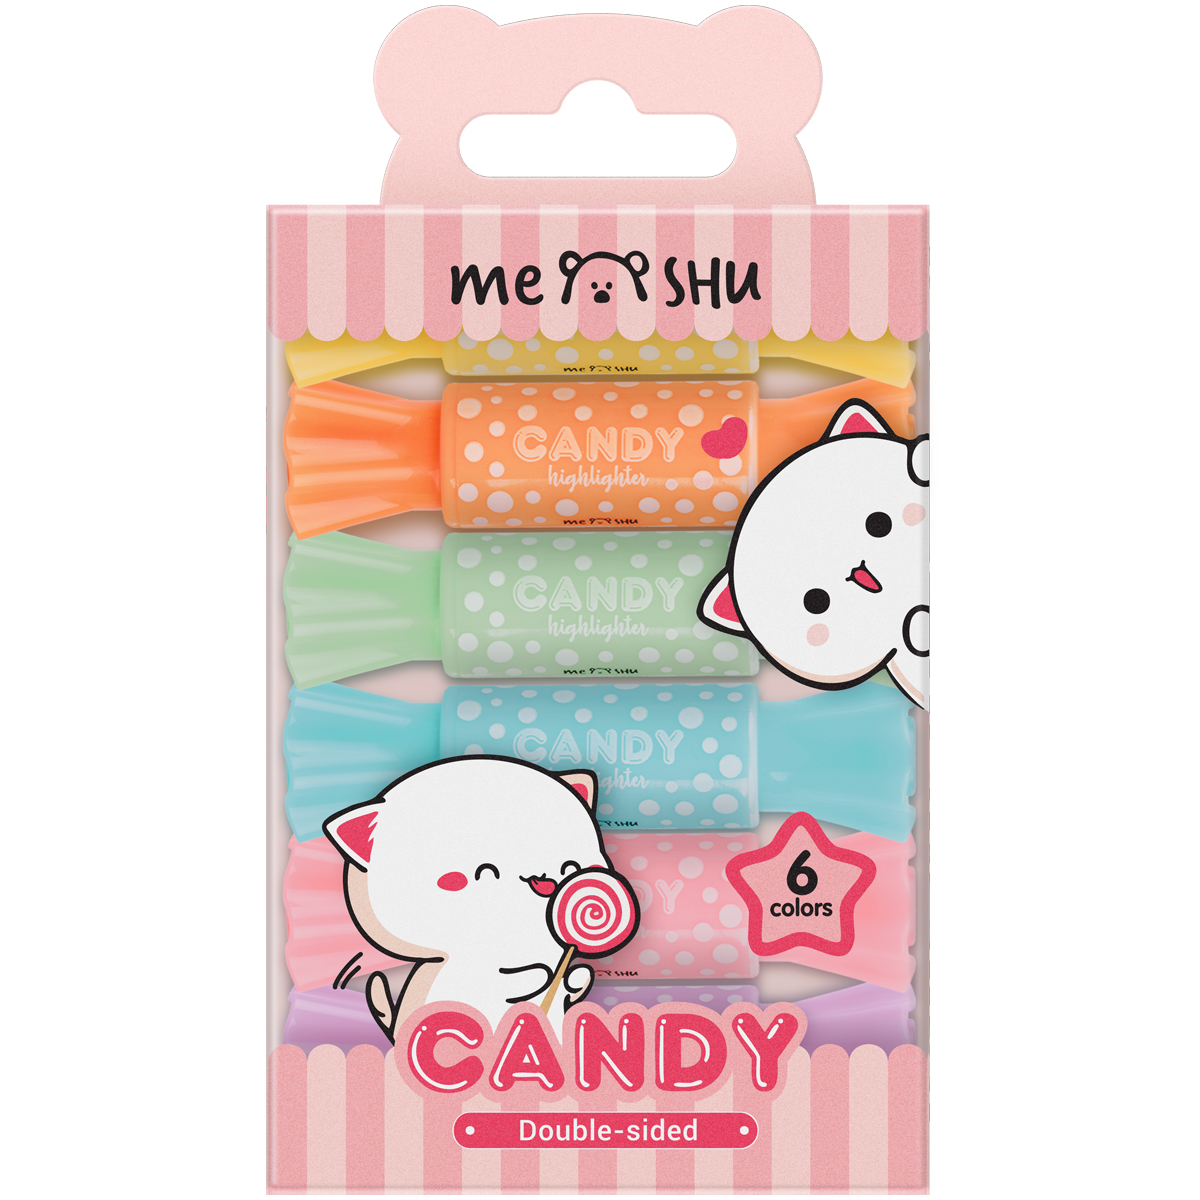    MESHU "Candy" 